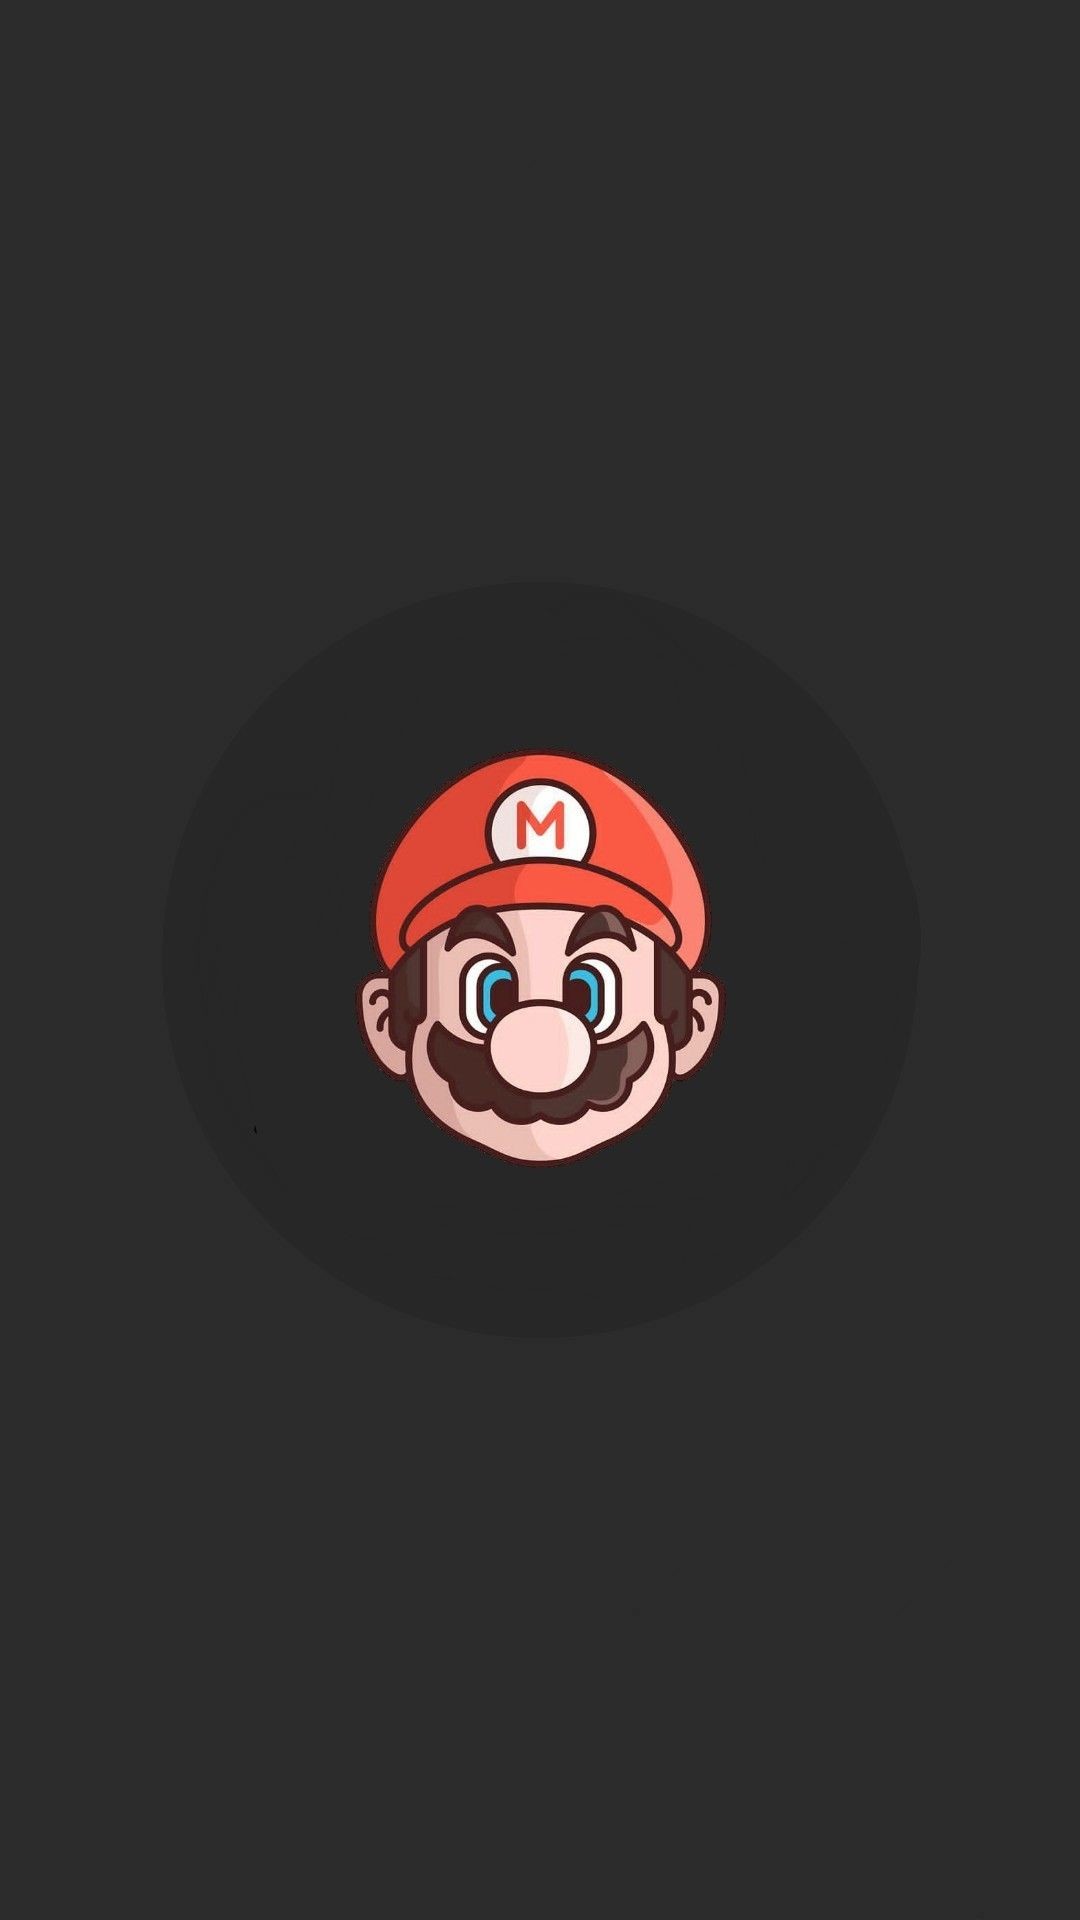 1080x1920 <3 Geeky Wallpaper, Wallpaper Backgrounds, Minimal Wallpaper, Retro Video  Games, Mario